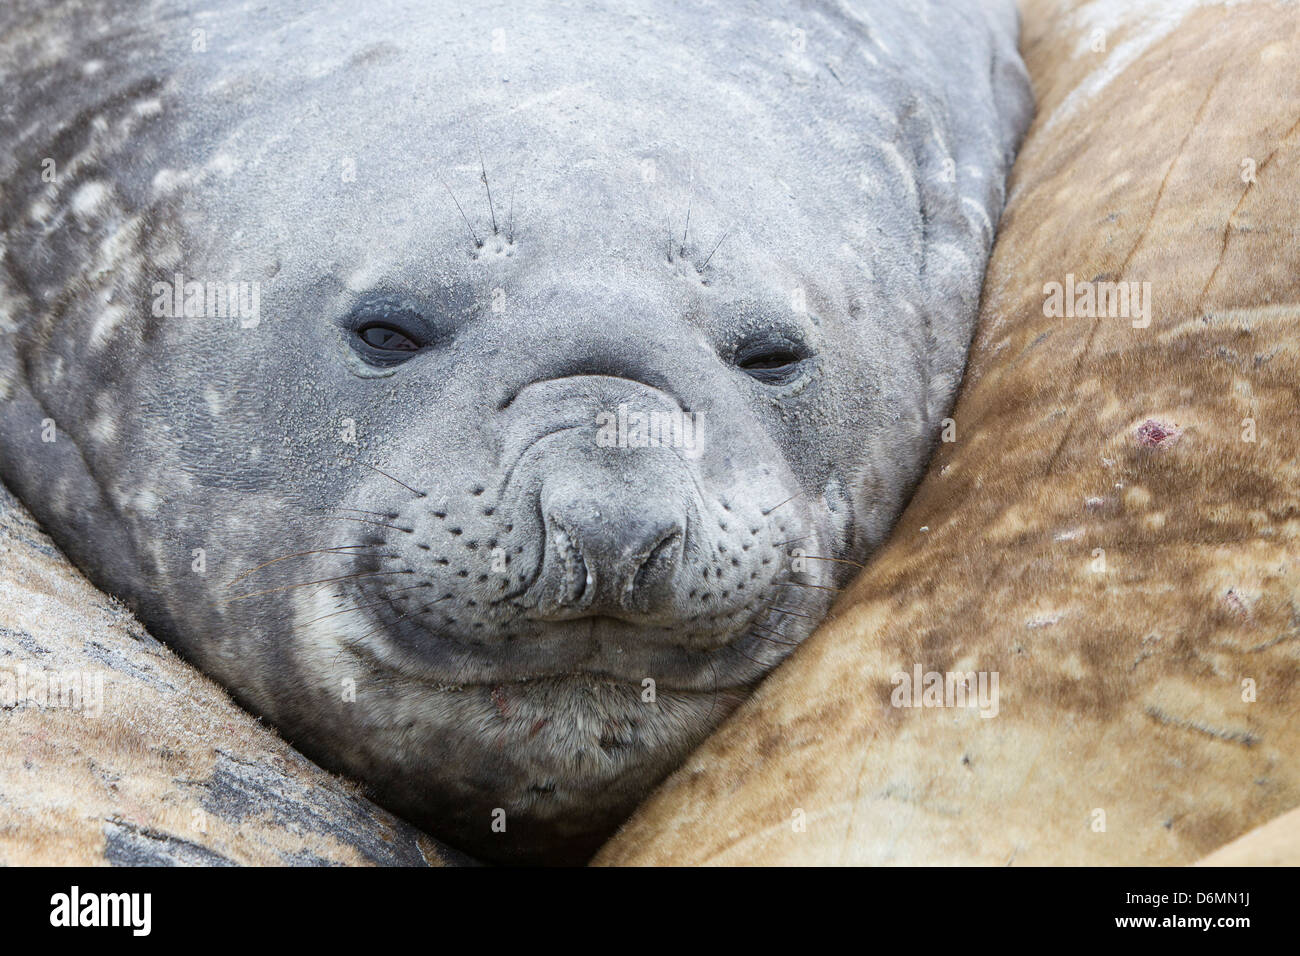 Southern Elephant Seal, Mirounga leonina, Südlicher See-Elefant, Sea Lion Island, Falkland Islands, young bull resting Stock Photo